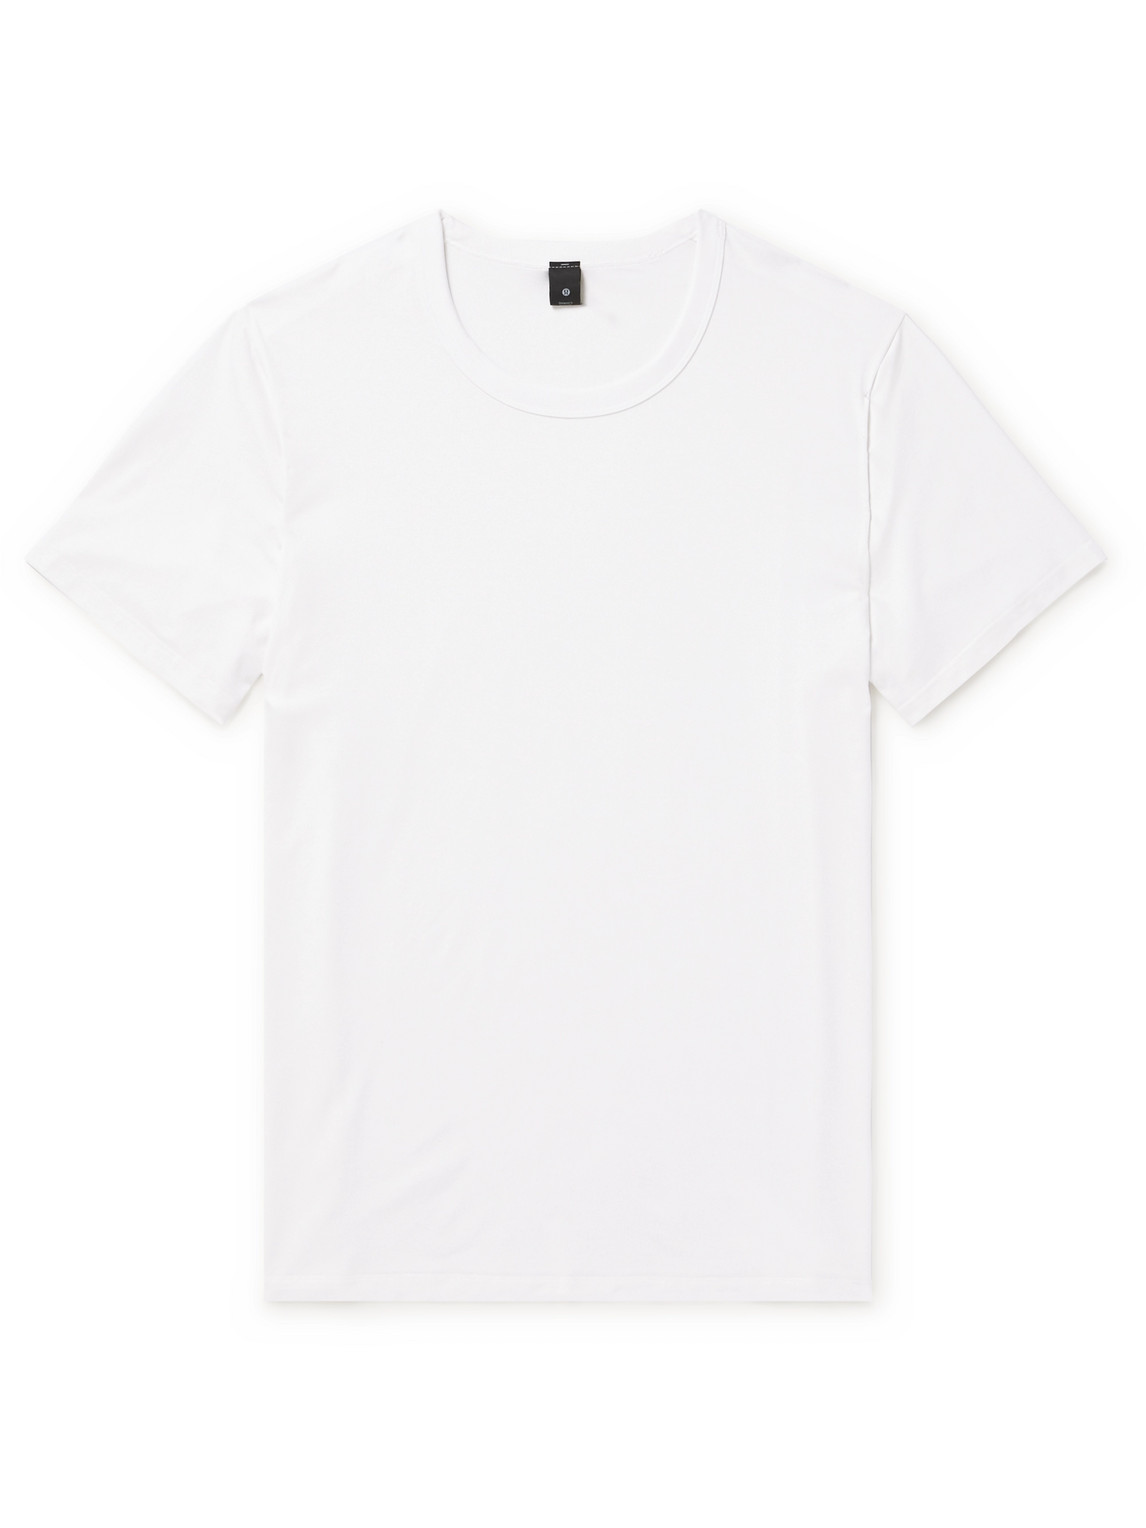 Lululemon - The Fundamental Jersey T-Shirt - Men - White - L von Lululemon